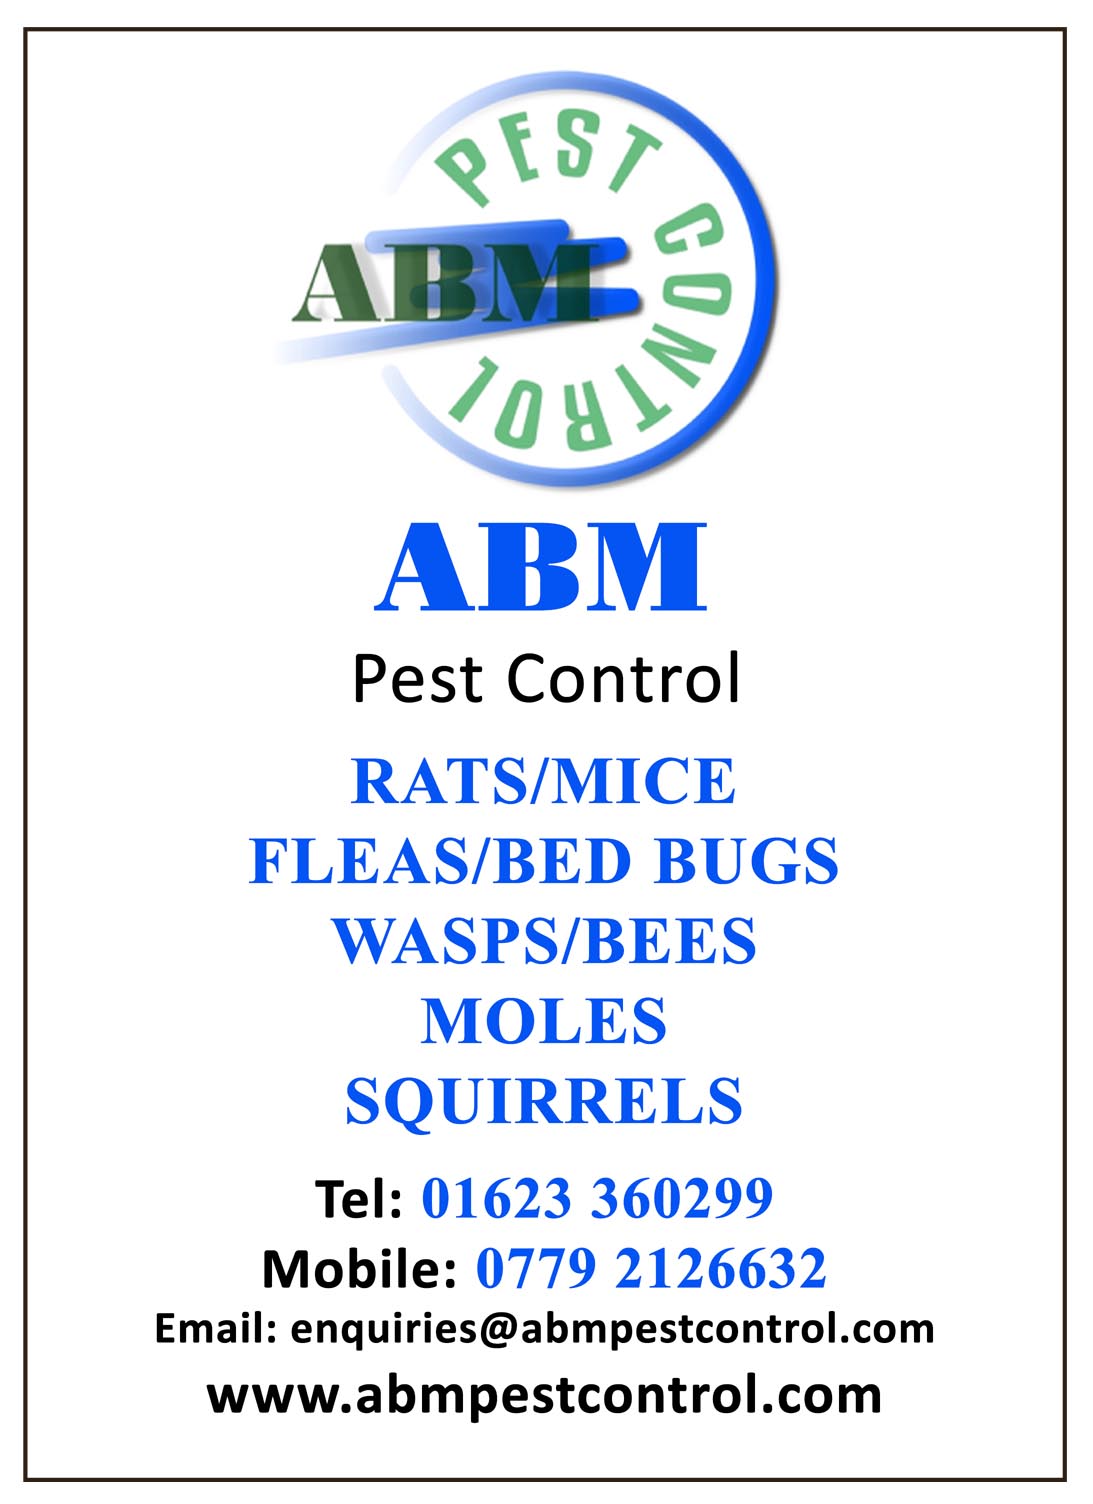 ABM Pest Control